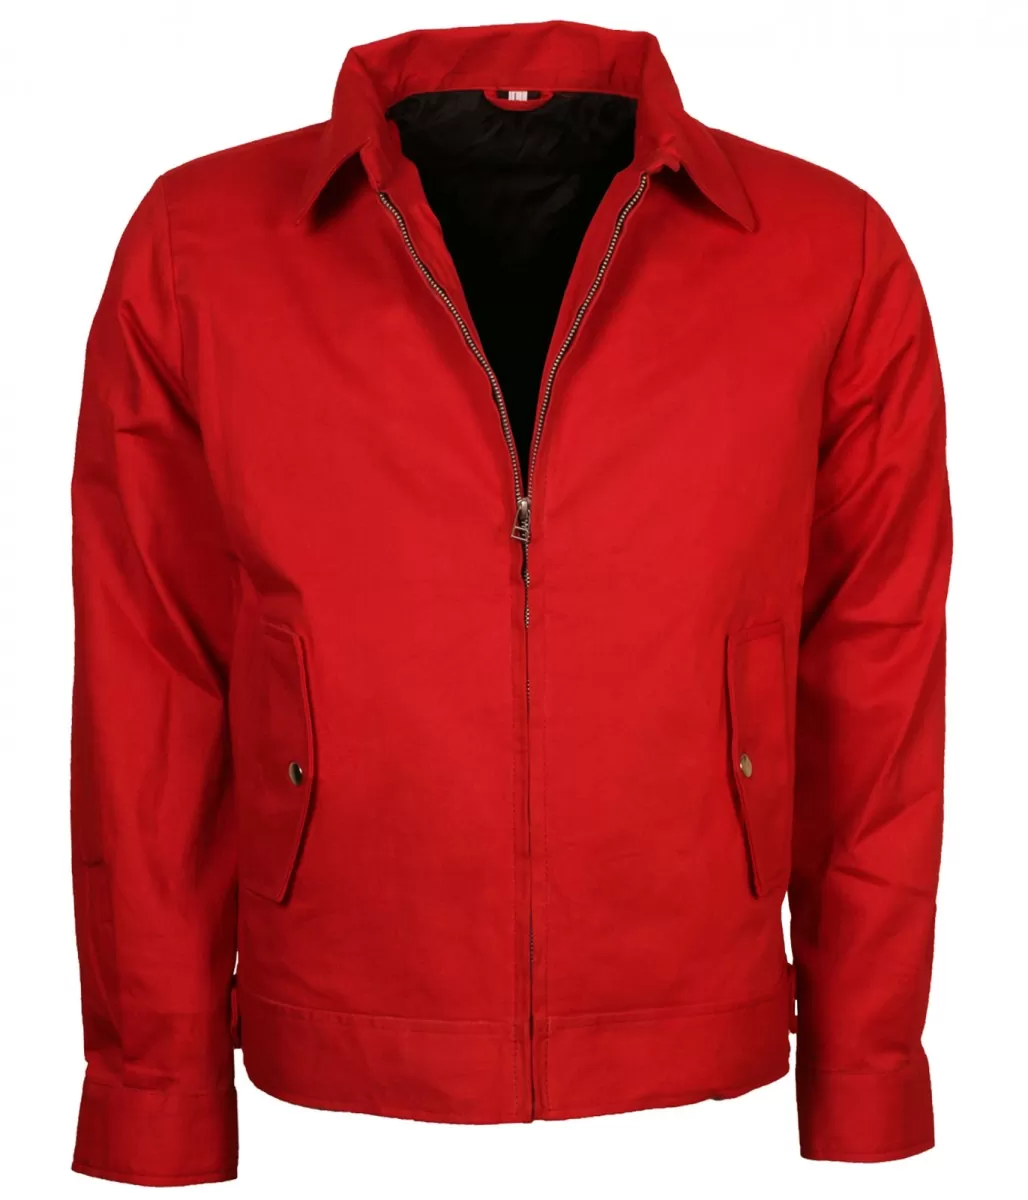 James Dean Red Cotton Jacket front